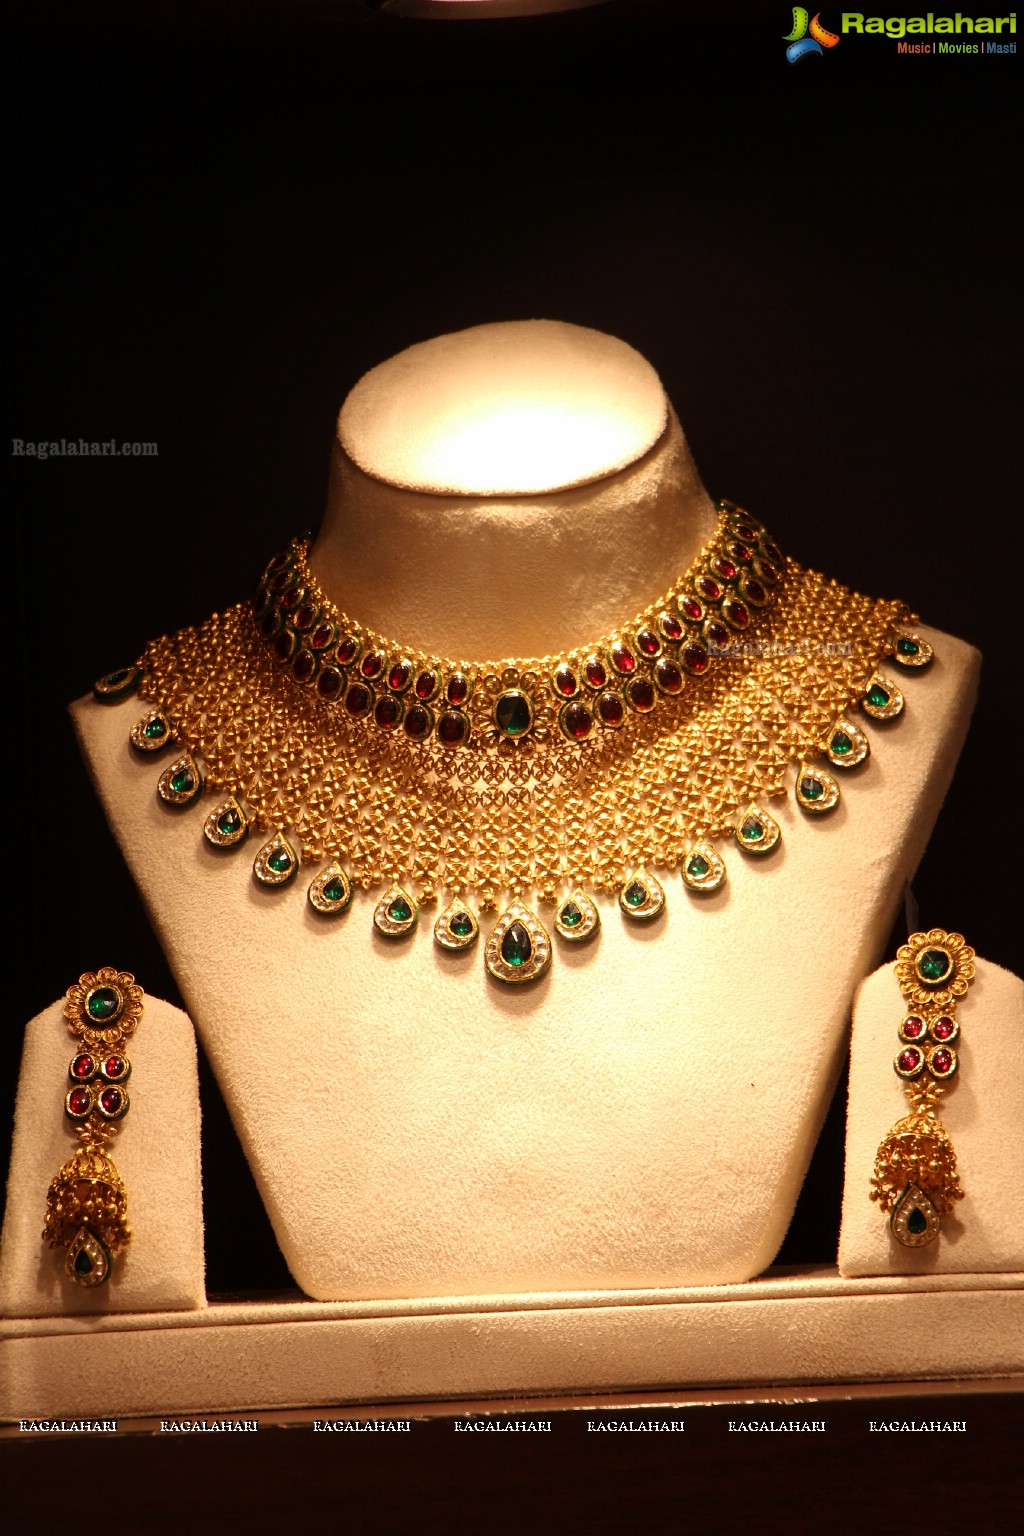 CMR Silks and Jewels Launch, Somajiguda, Hyderabad